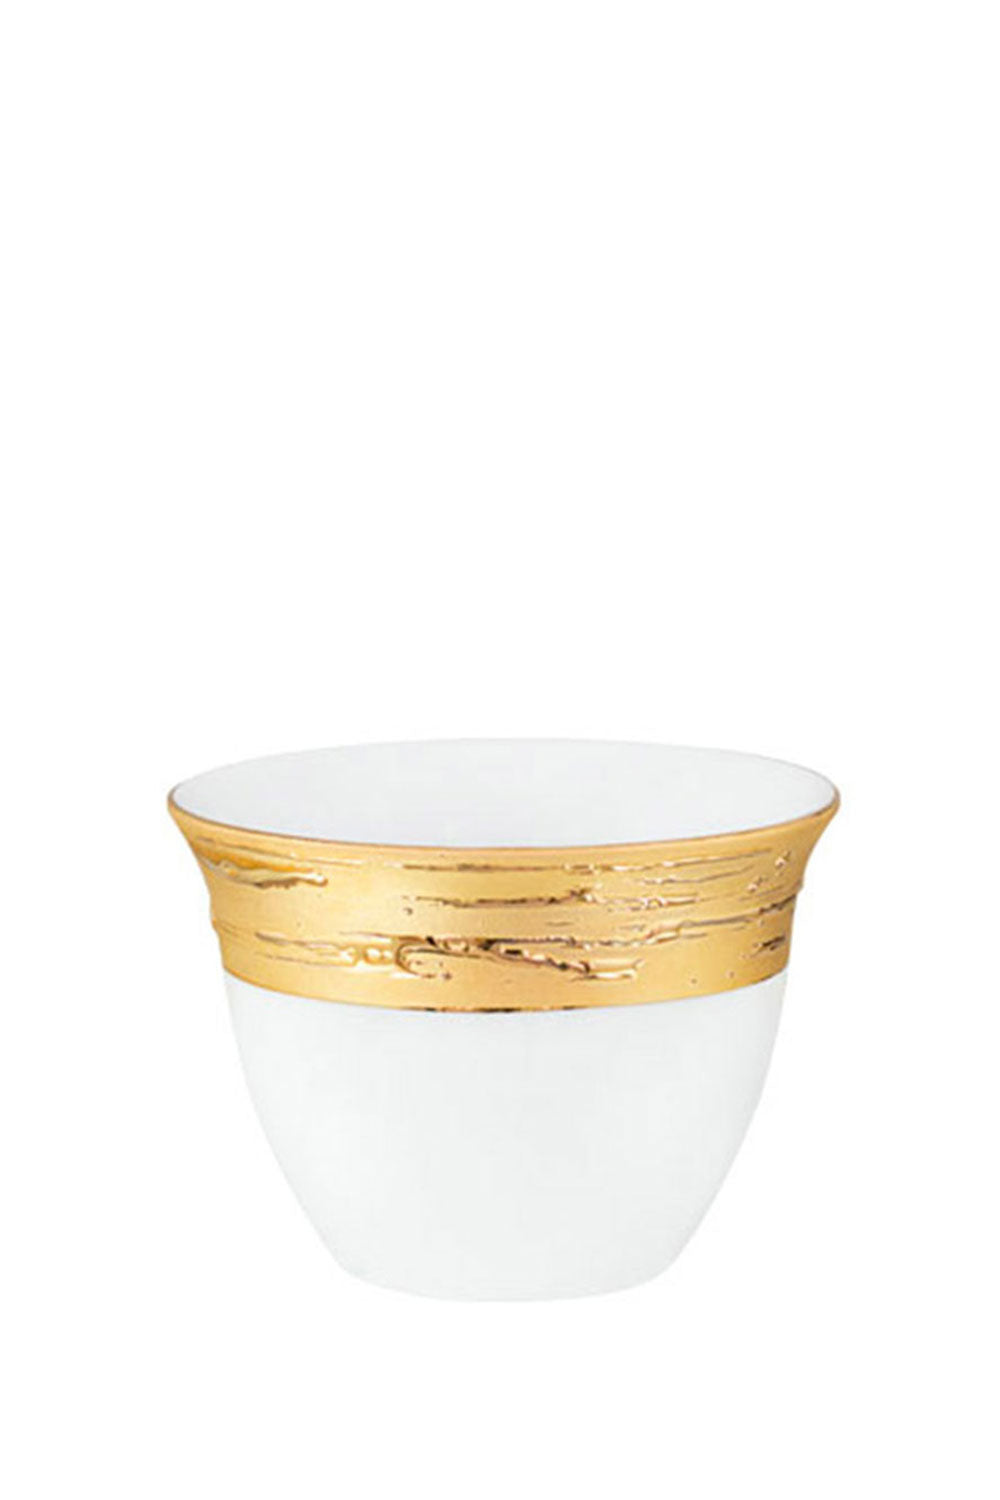 Auratus Gold Gawa Cup,Set of 6, White/Gold, 50 ml